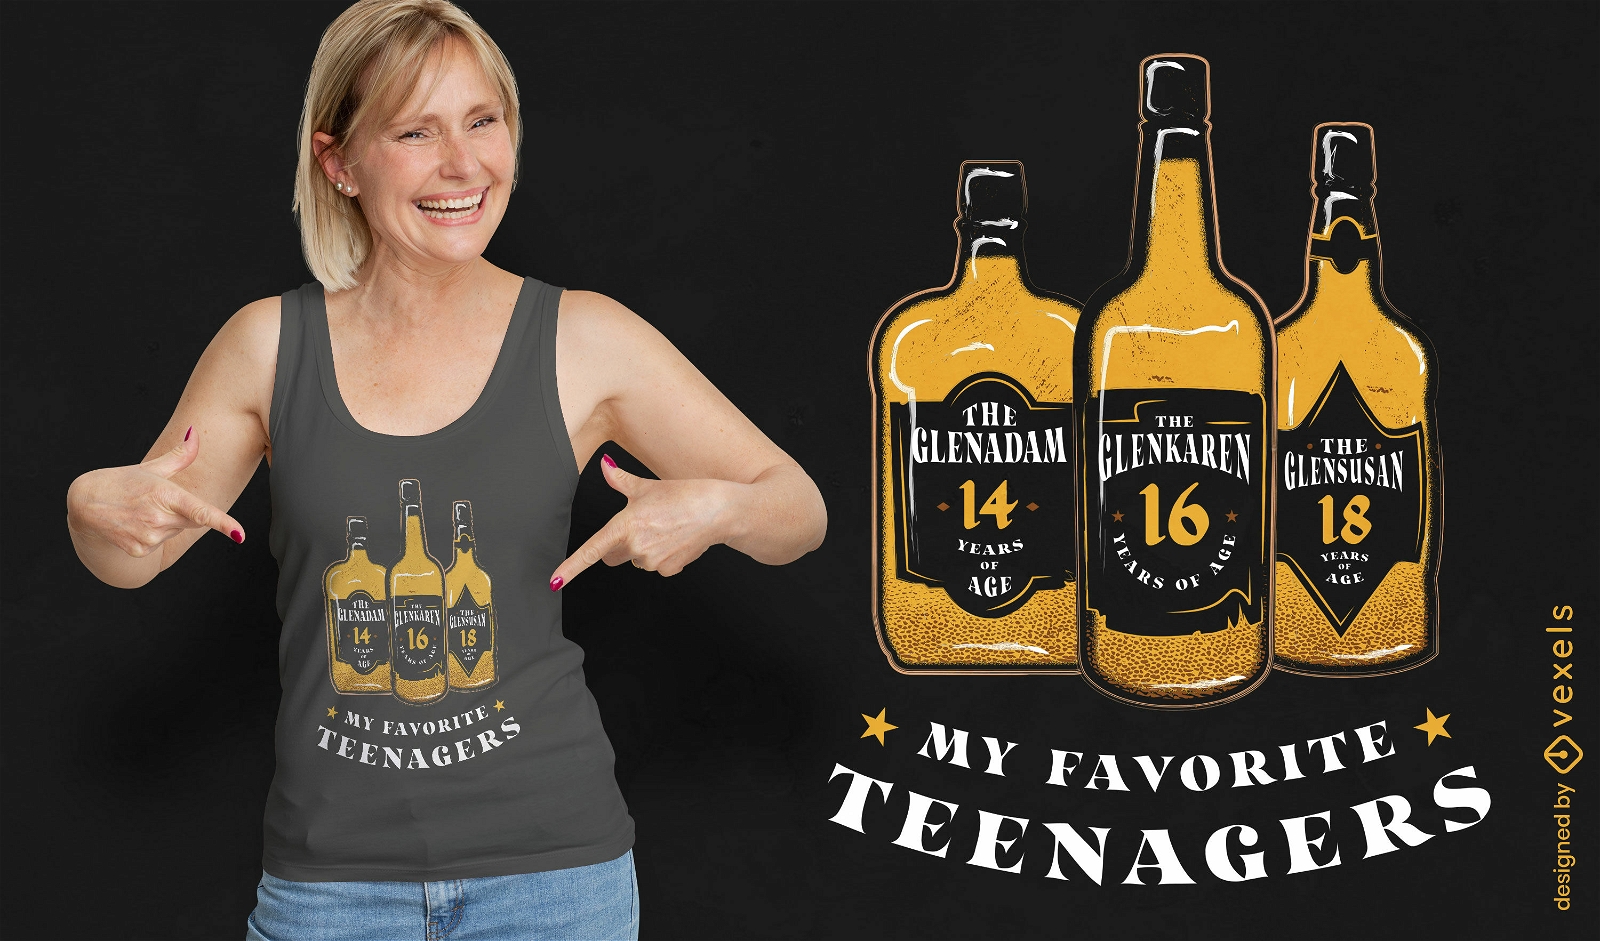 Diseño clásico de camiseta de botellas de whisky.